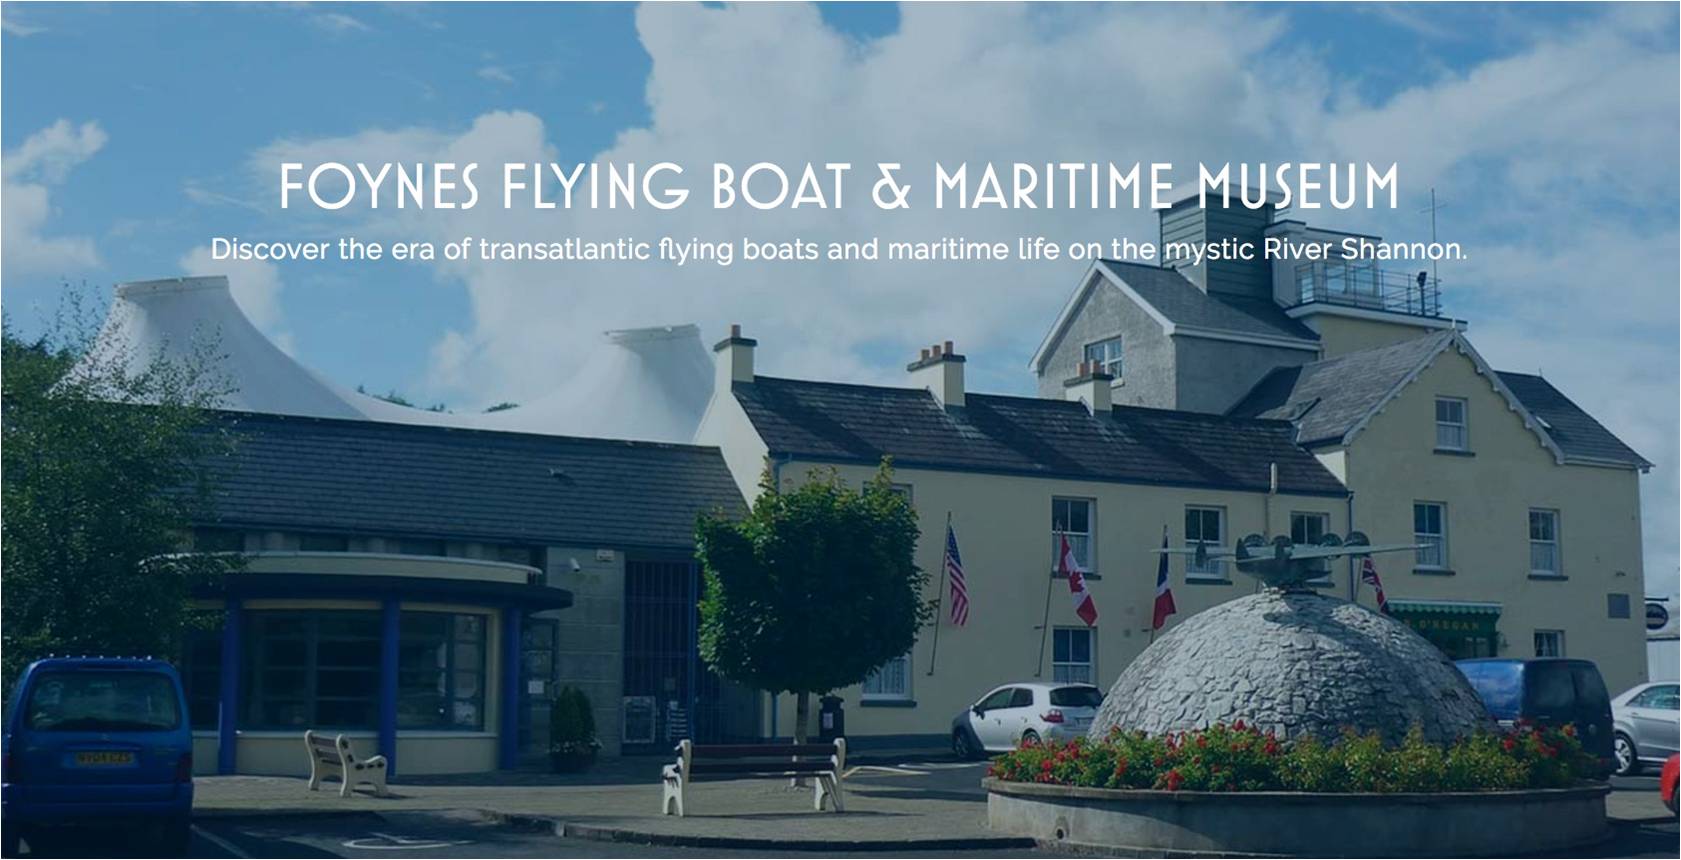 Foynes Flying Boat & Maritime Museum